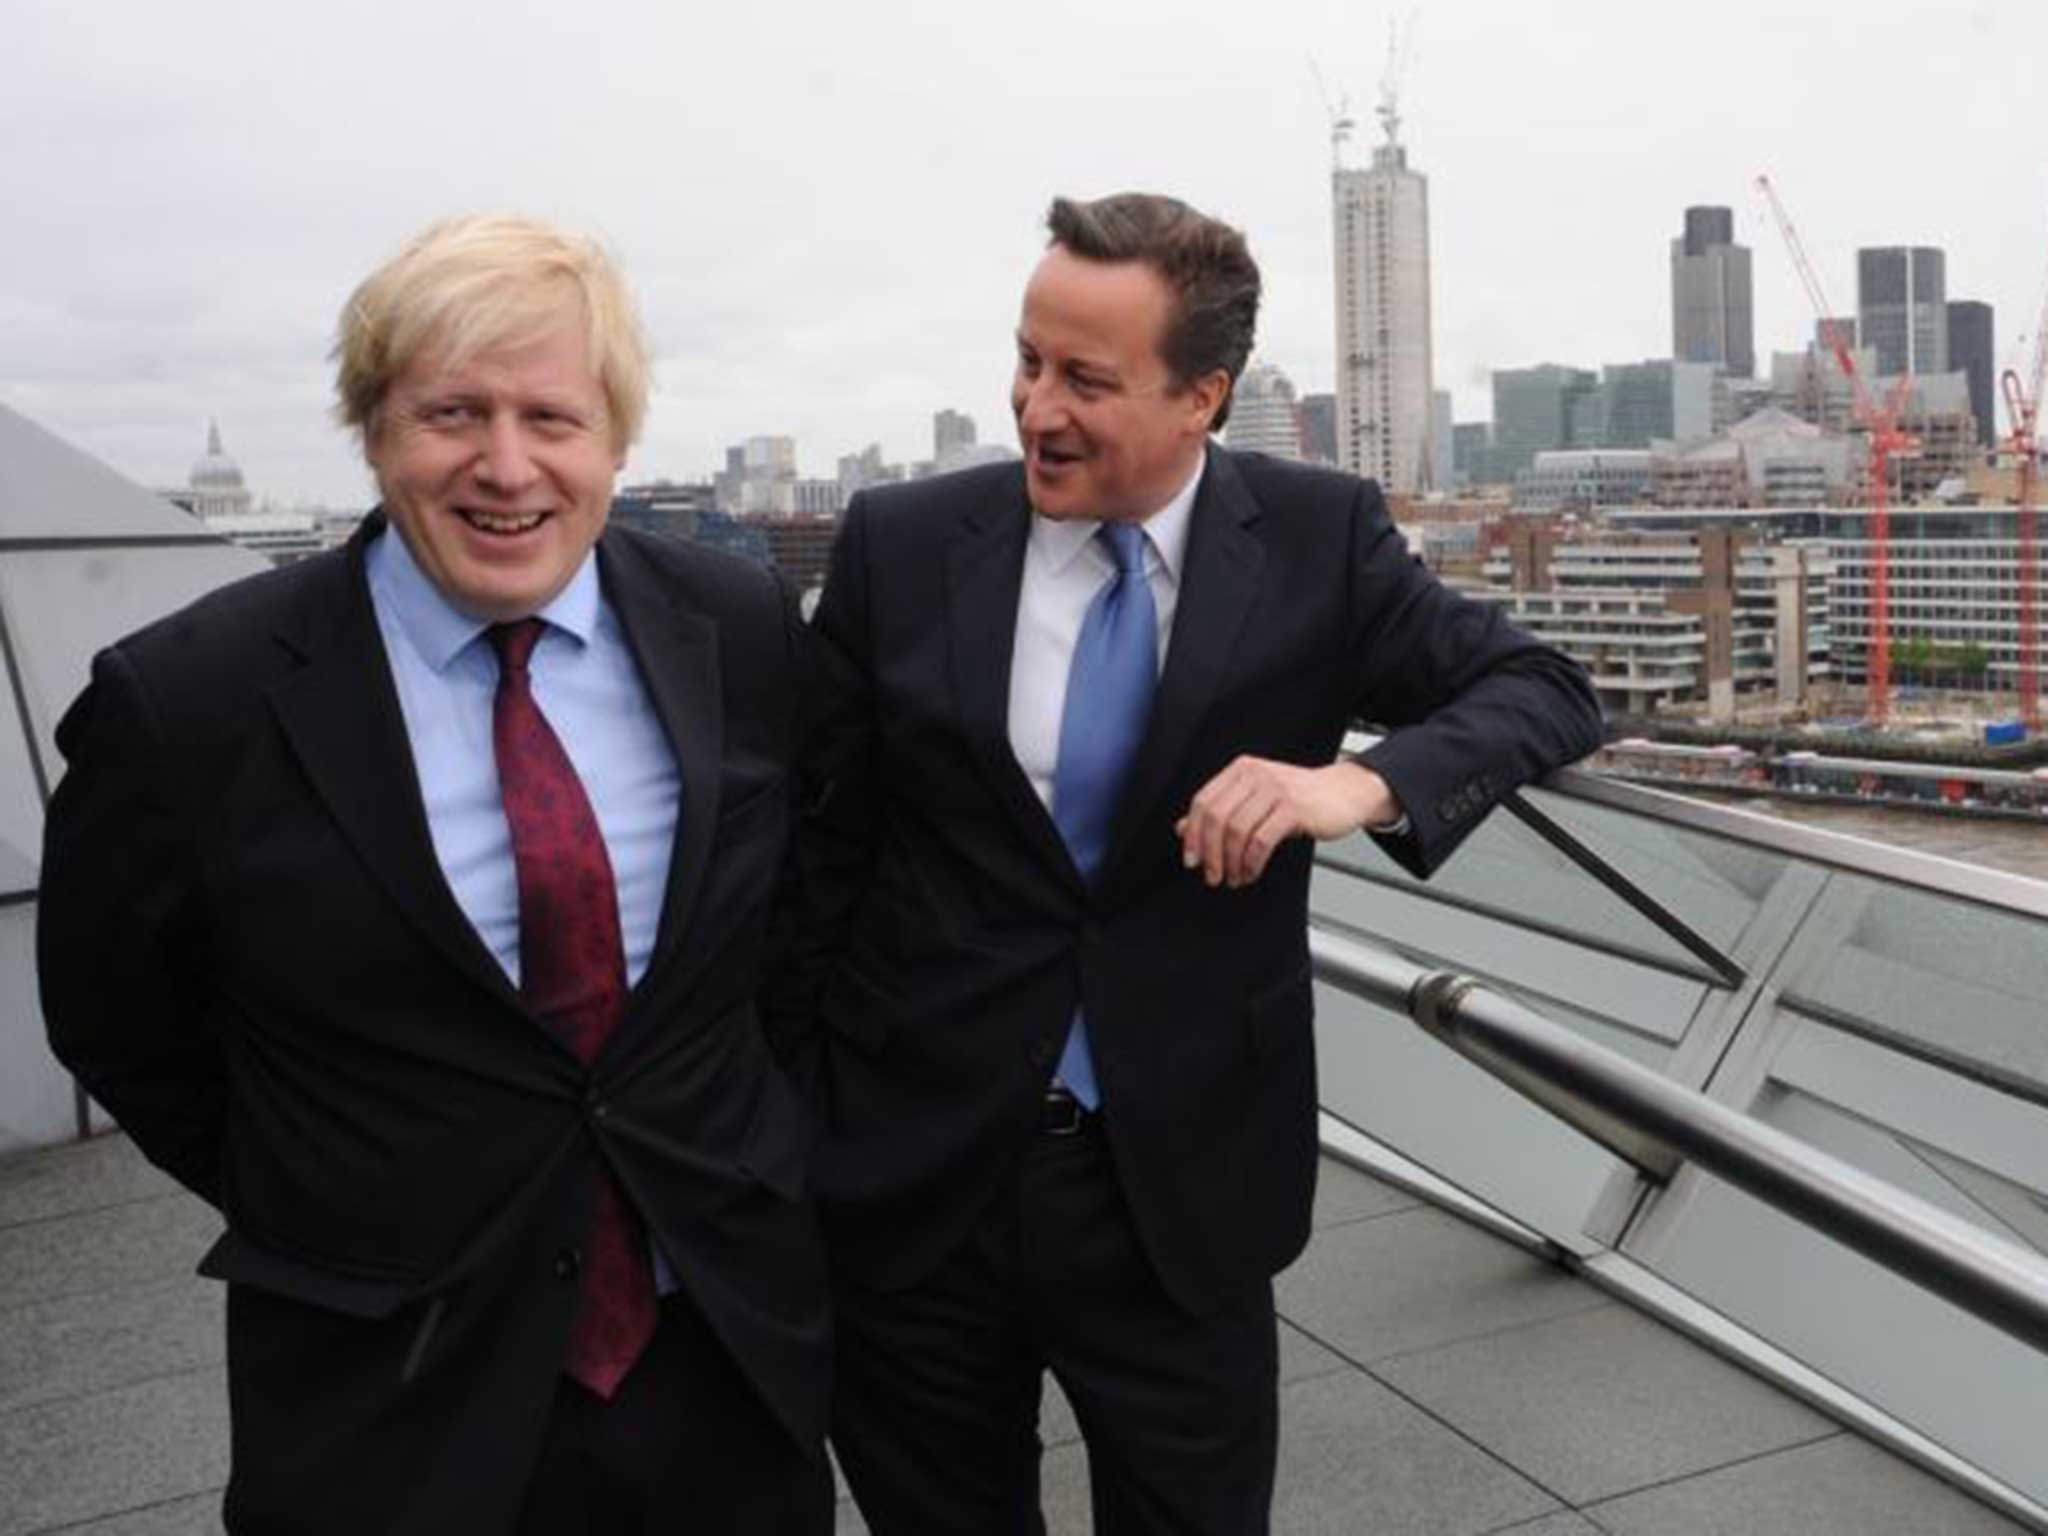 London Mayor Boris Johnson (left) with David Cameron